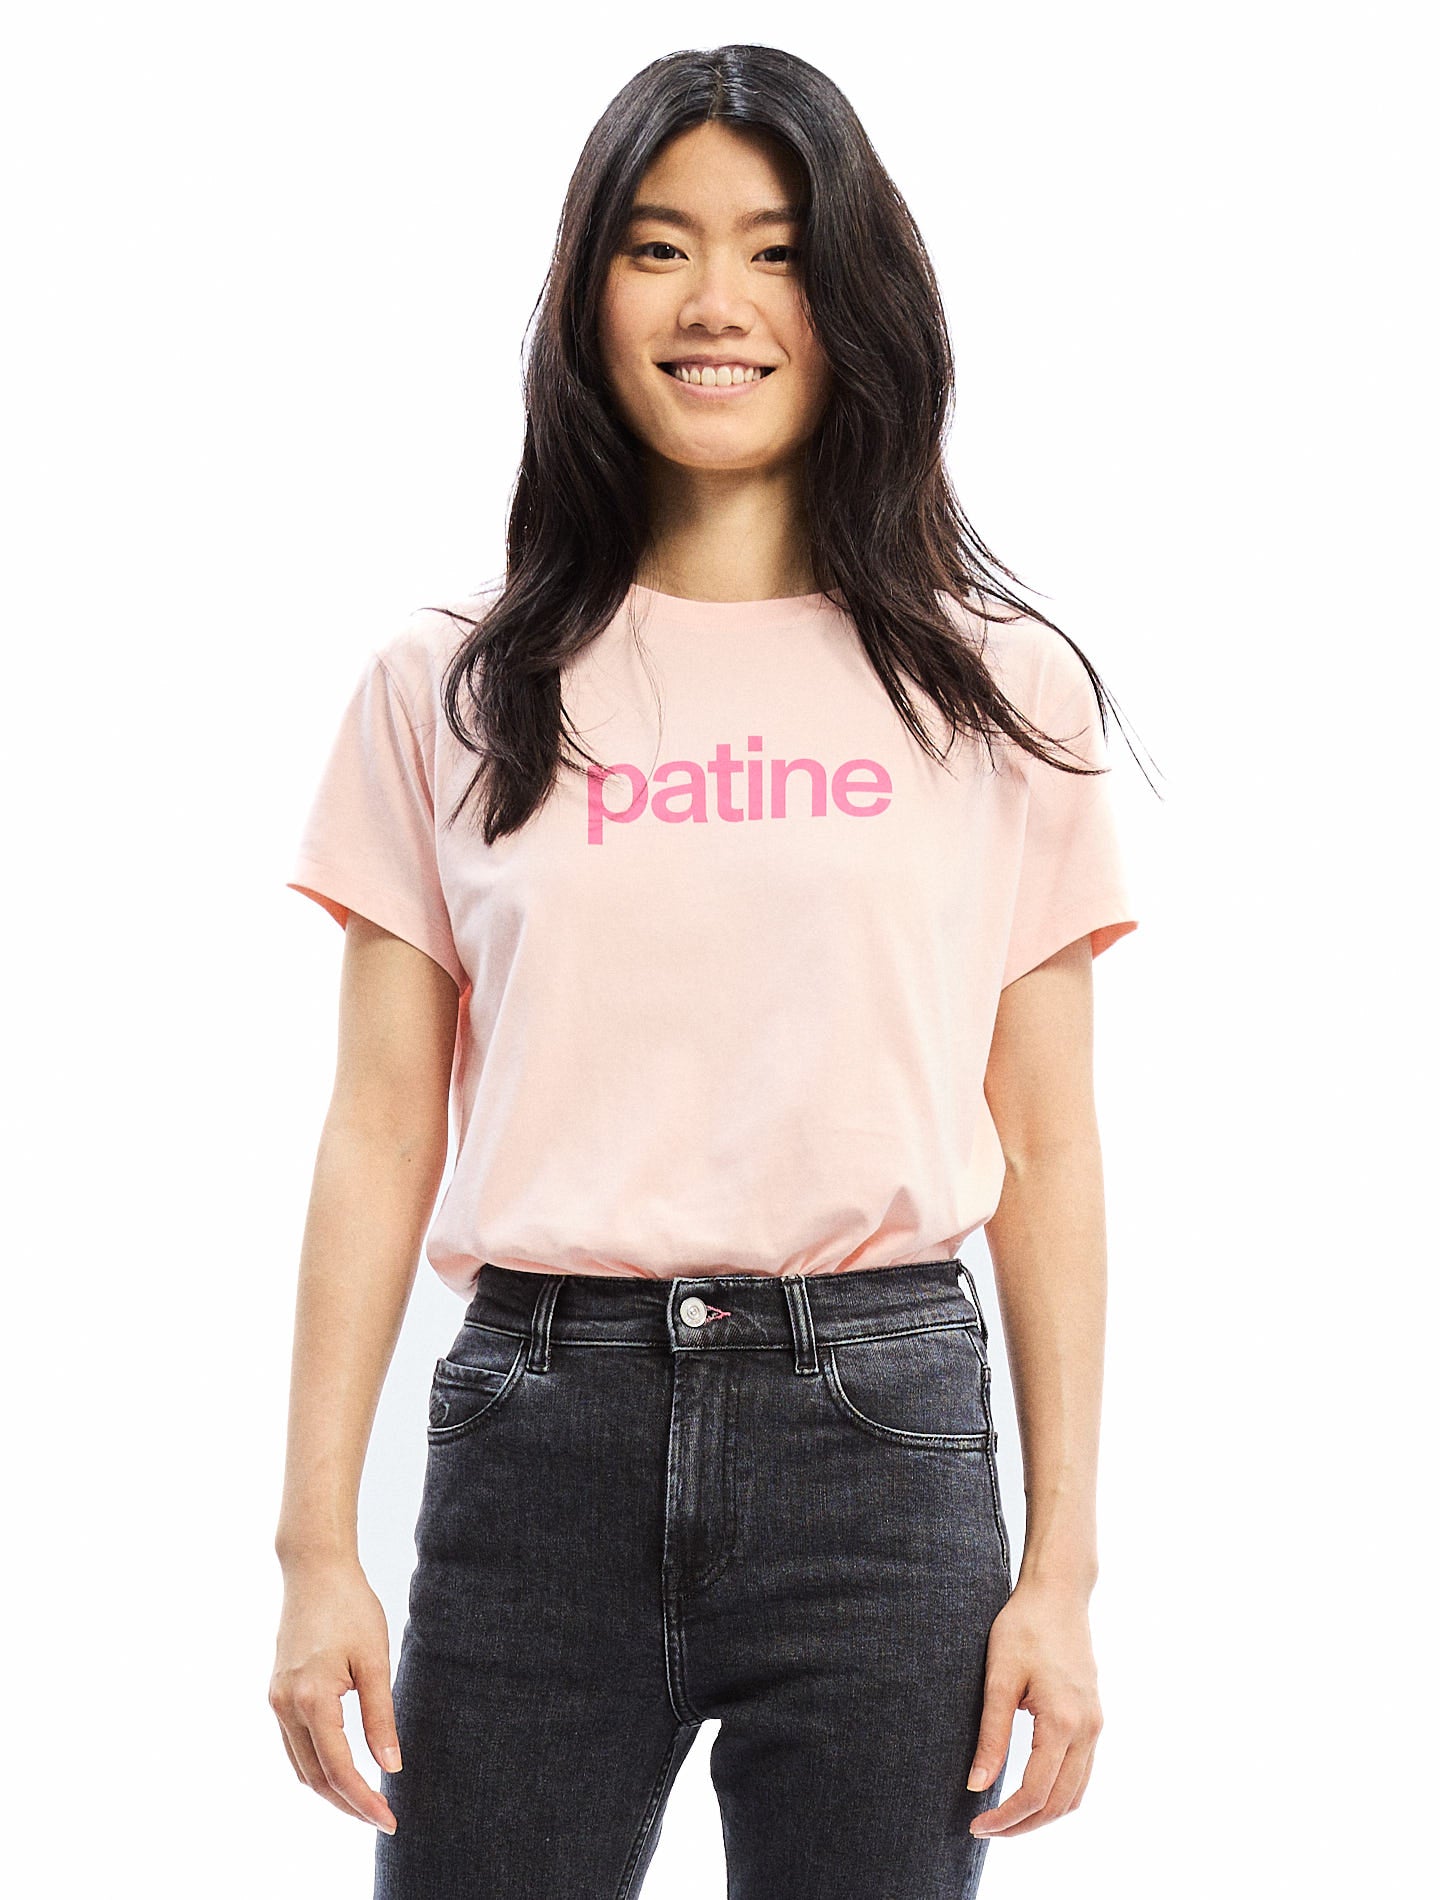 Le tee-shirt Iconic Willie®  jersey bio-recyclé Patine Rose Milkshake